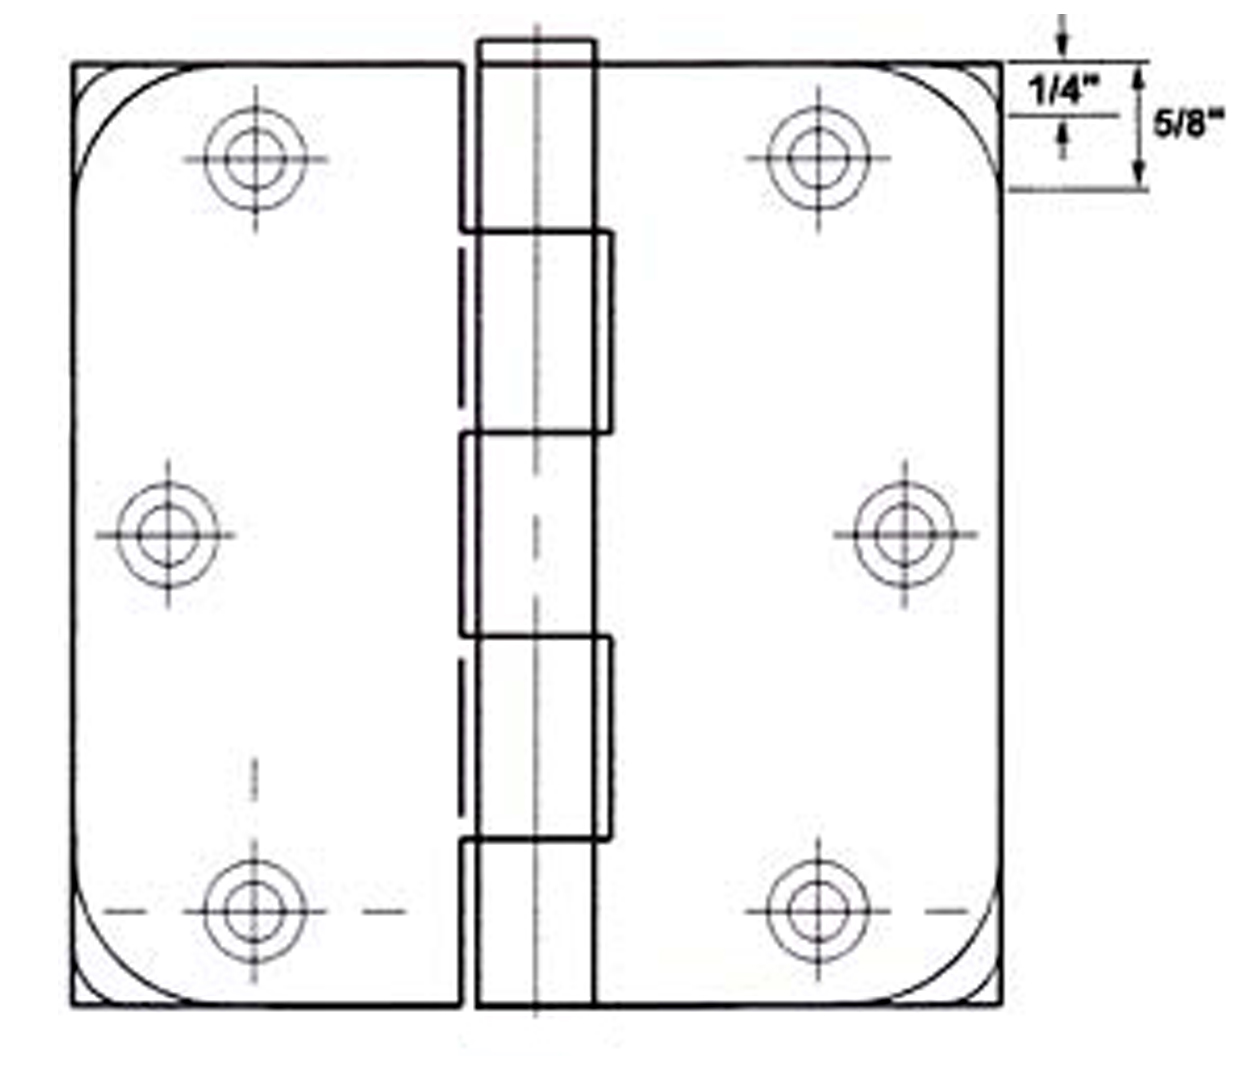 GlideRite 4 in. Steel Door Hinge with Square Corner Radius, Satin Nickel finish, Pack of 12 - image 2 of 3